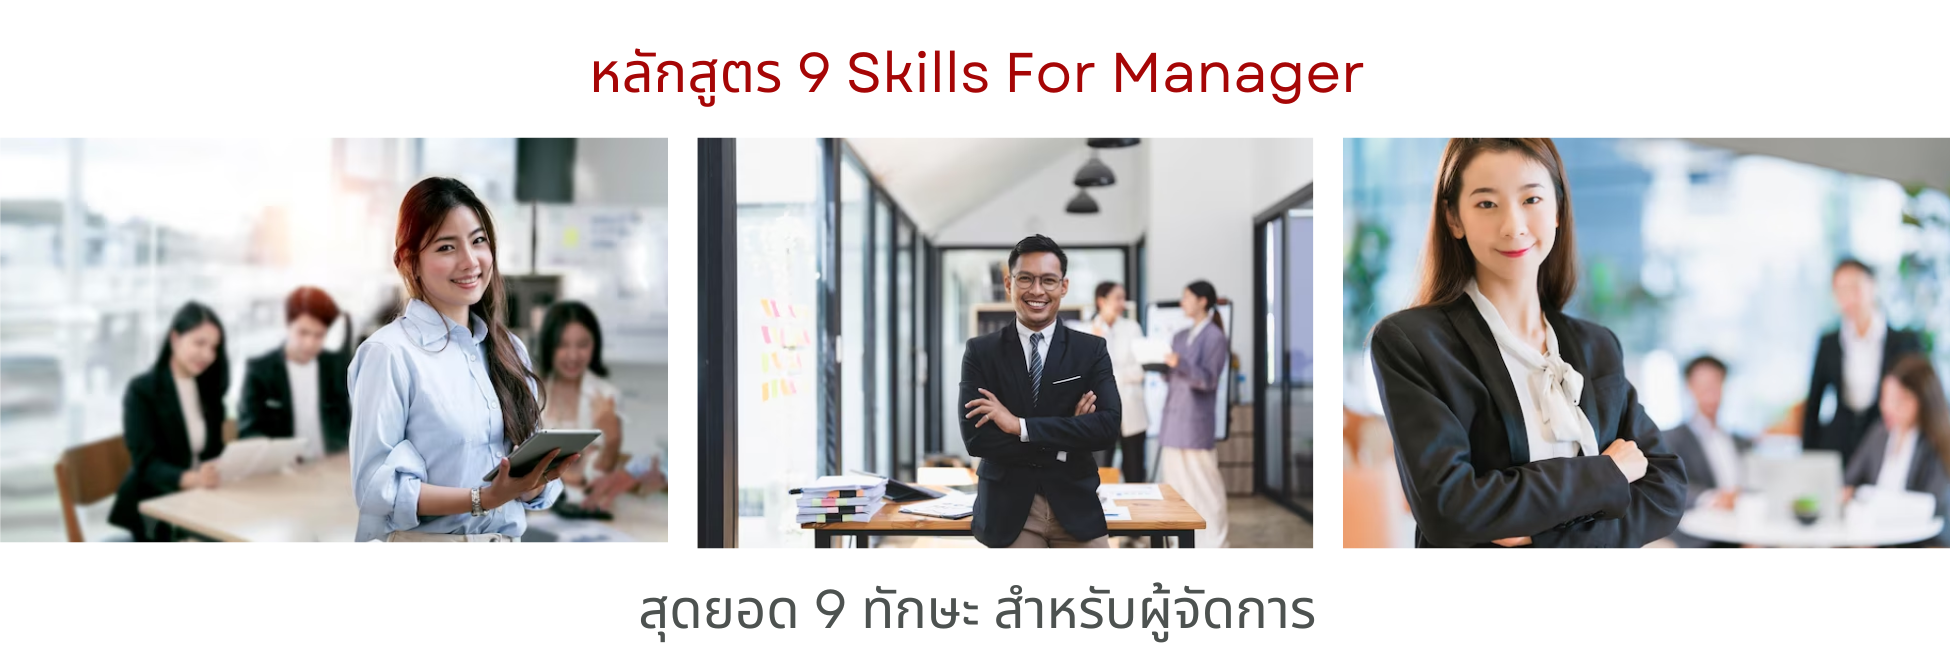 9 Skills For Manager แบนเนอร์ล่าง.png (851 KB)